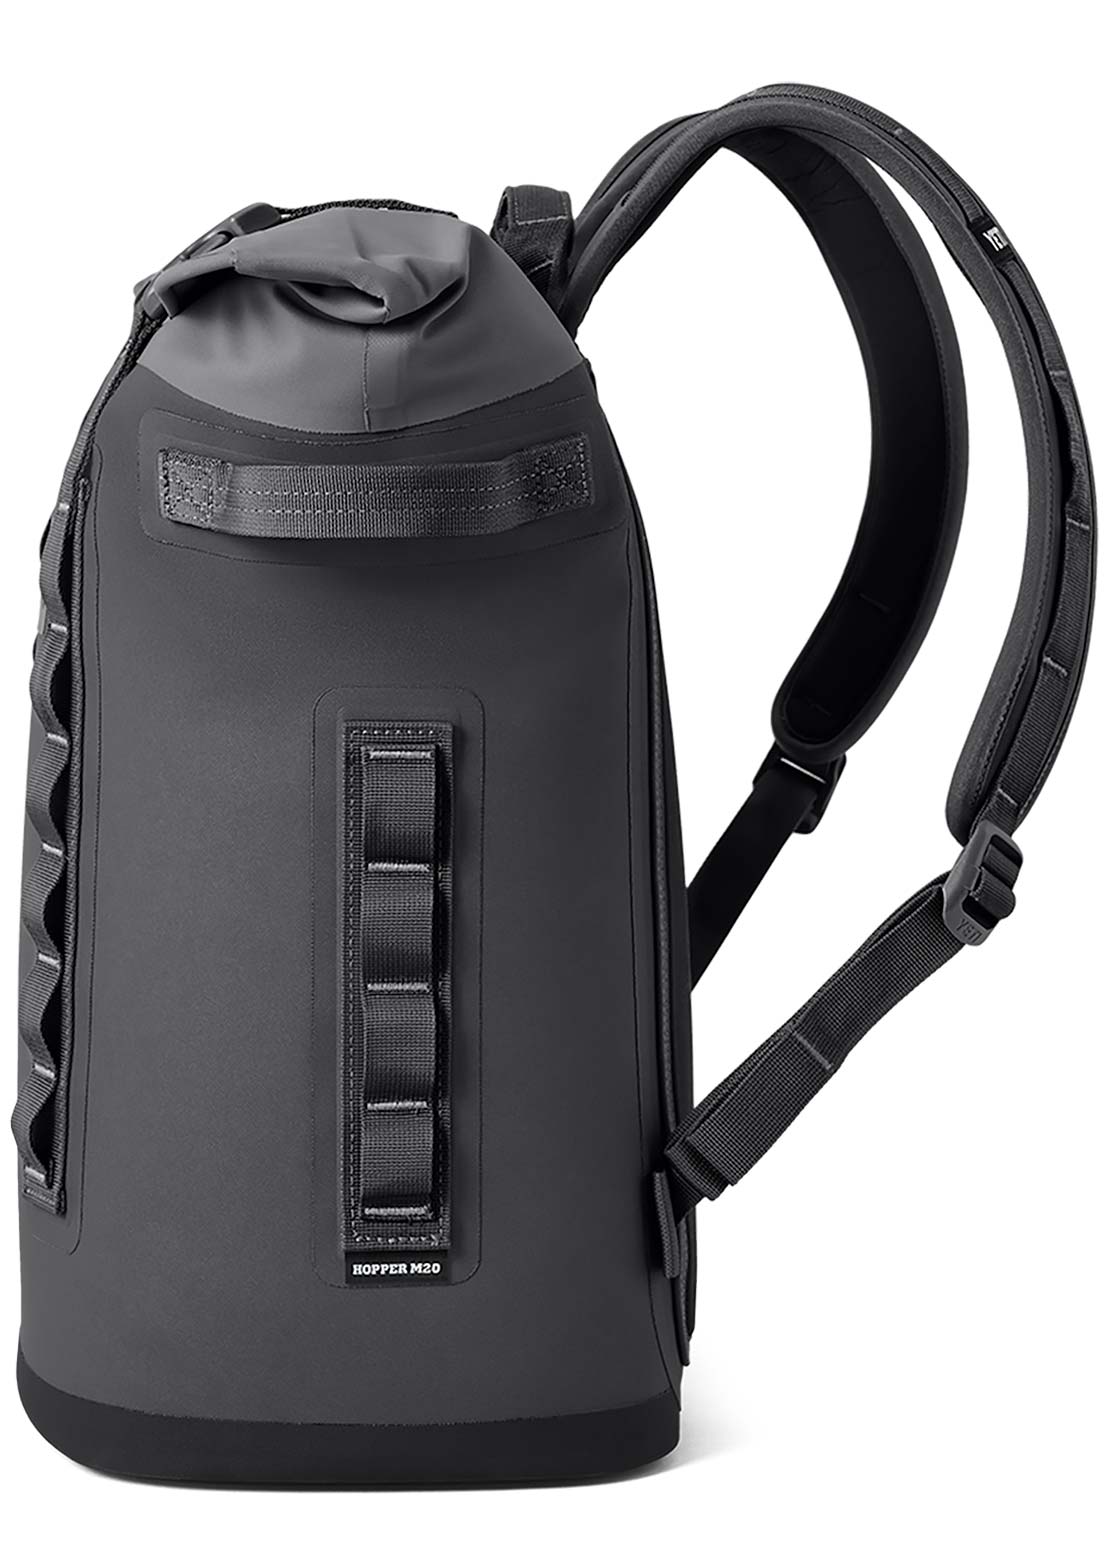 YETI Hopper Backpack M20 Soft Cooler Charcoal